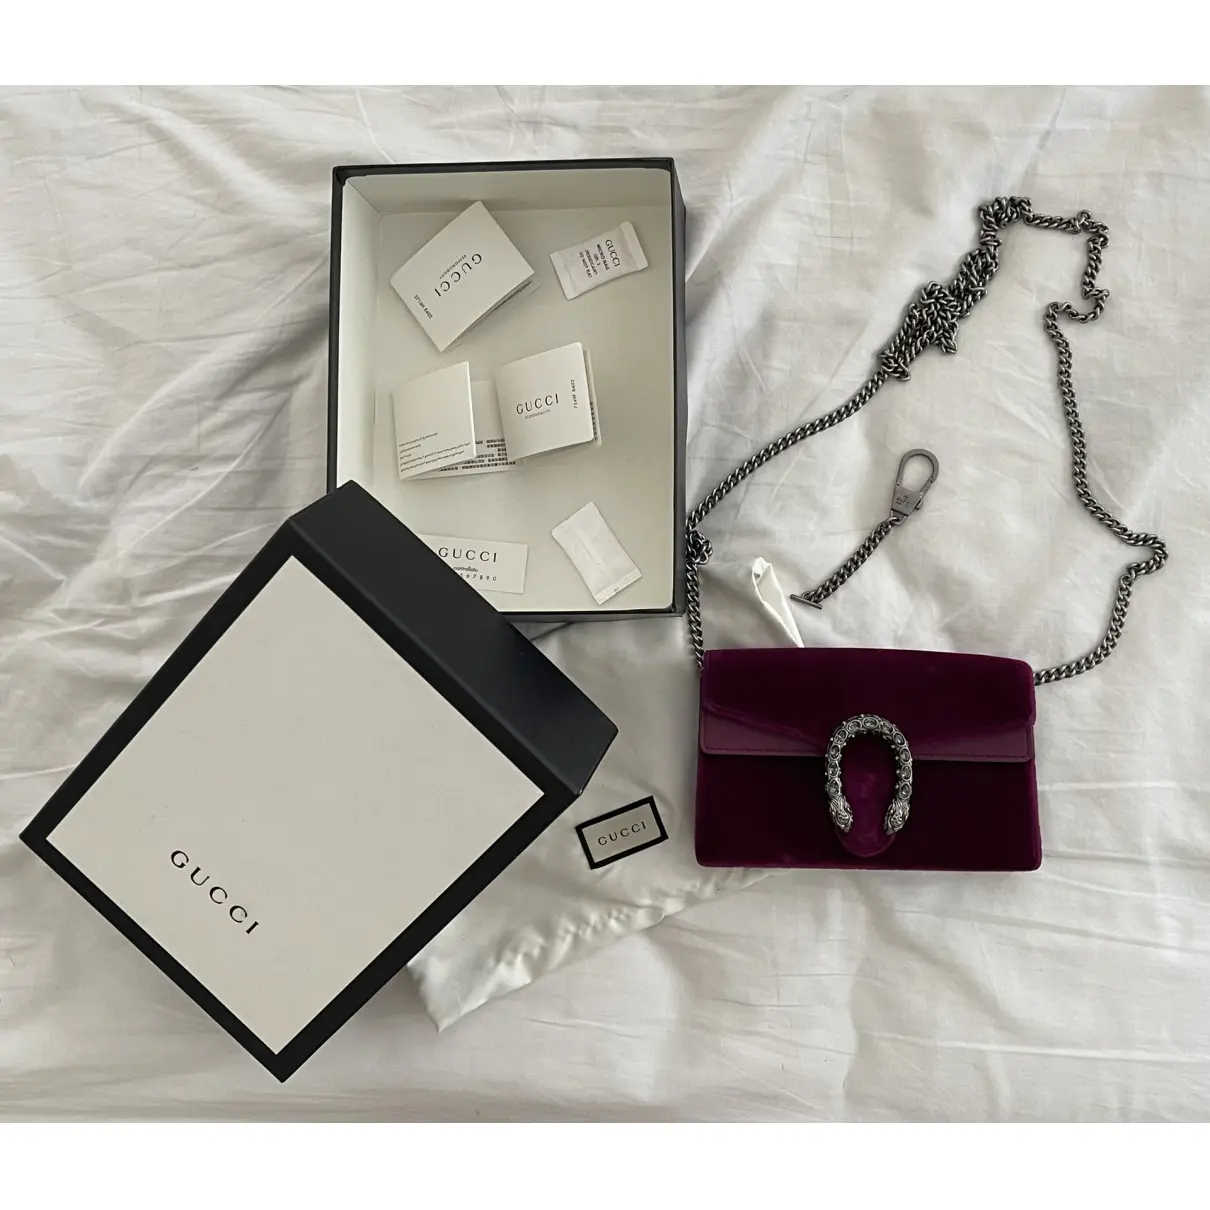 Buy Gucci Dionysus velvet handbag online